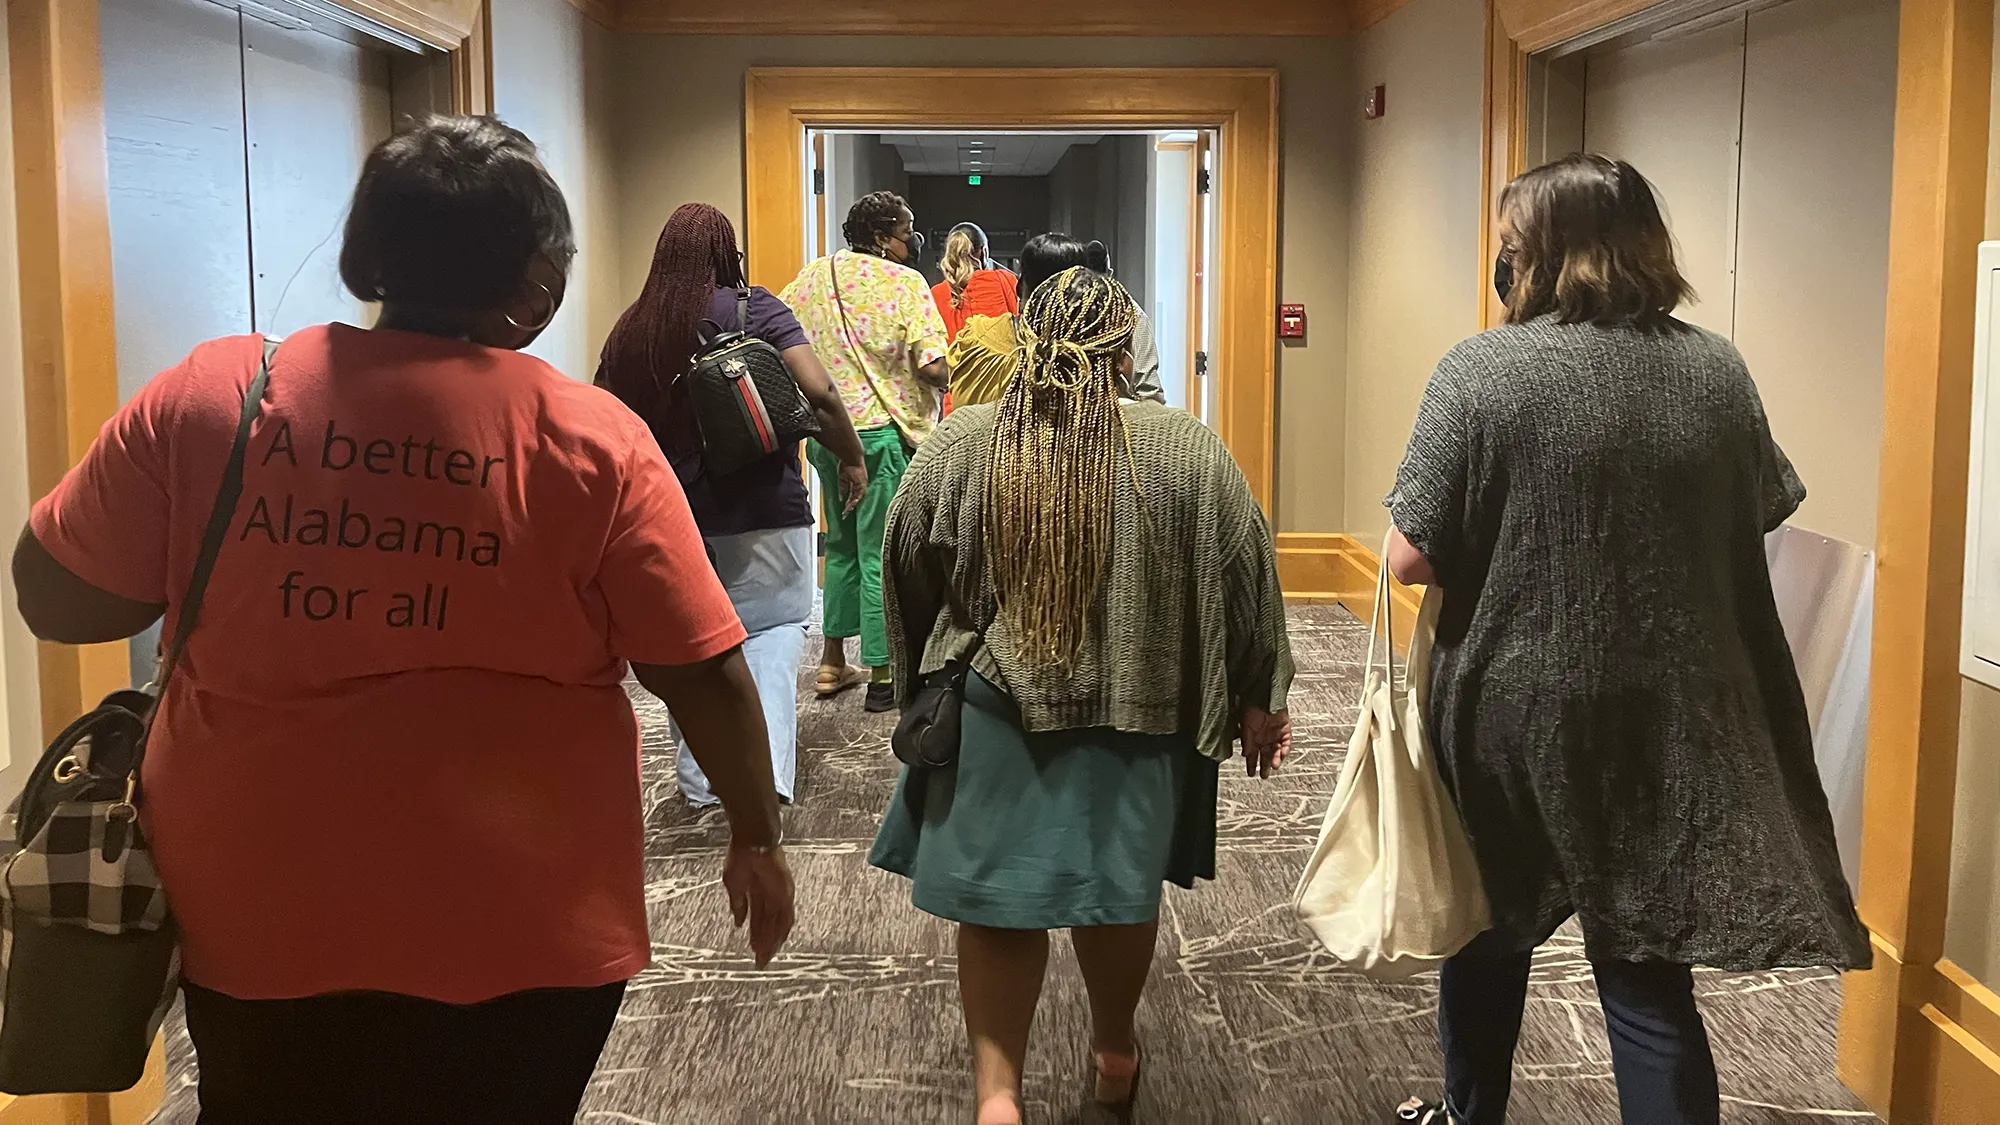 oral health advocates walk through hallway of Alabama State House